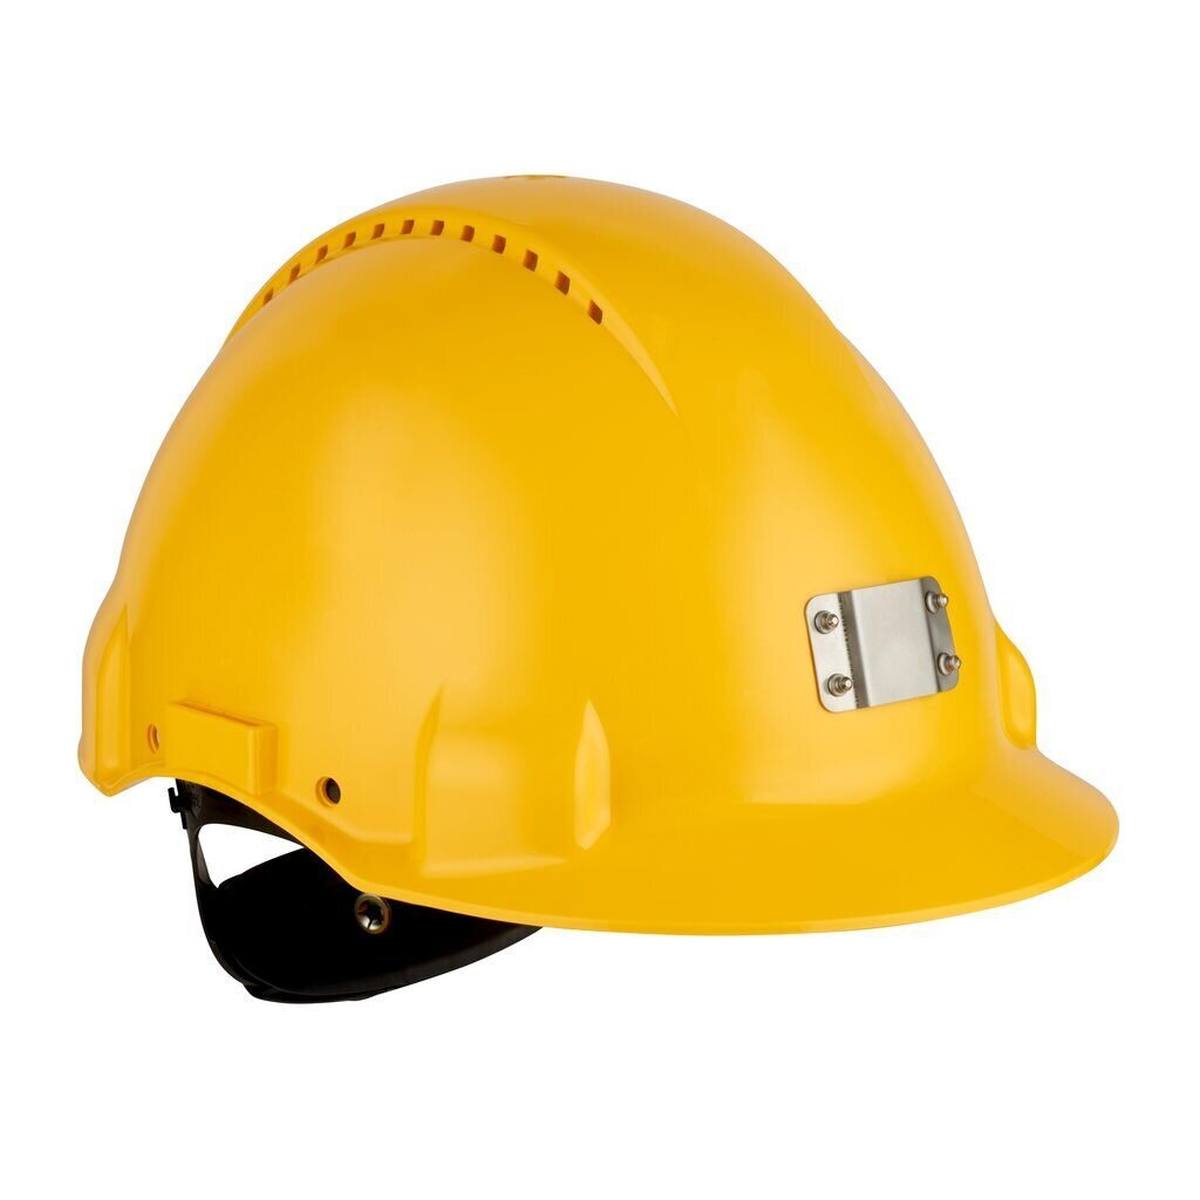 3M safety helmet, Uvicator, ratchet closure, ventilation, plastic welding tape, lamp holder, yellow, G3000NUV-10-GB